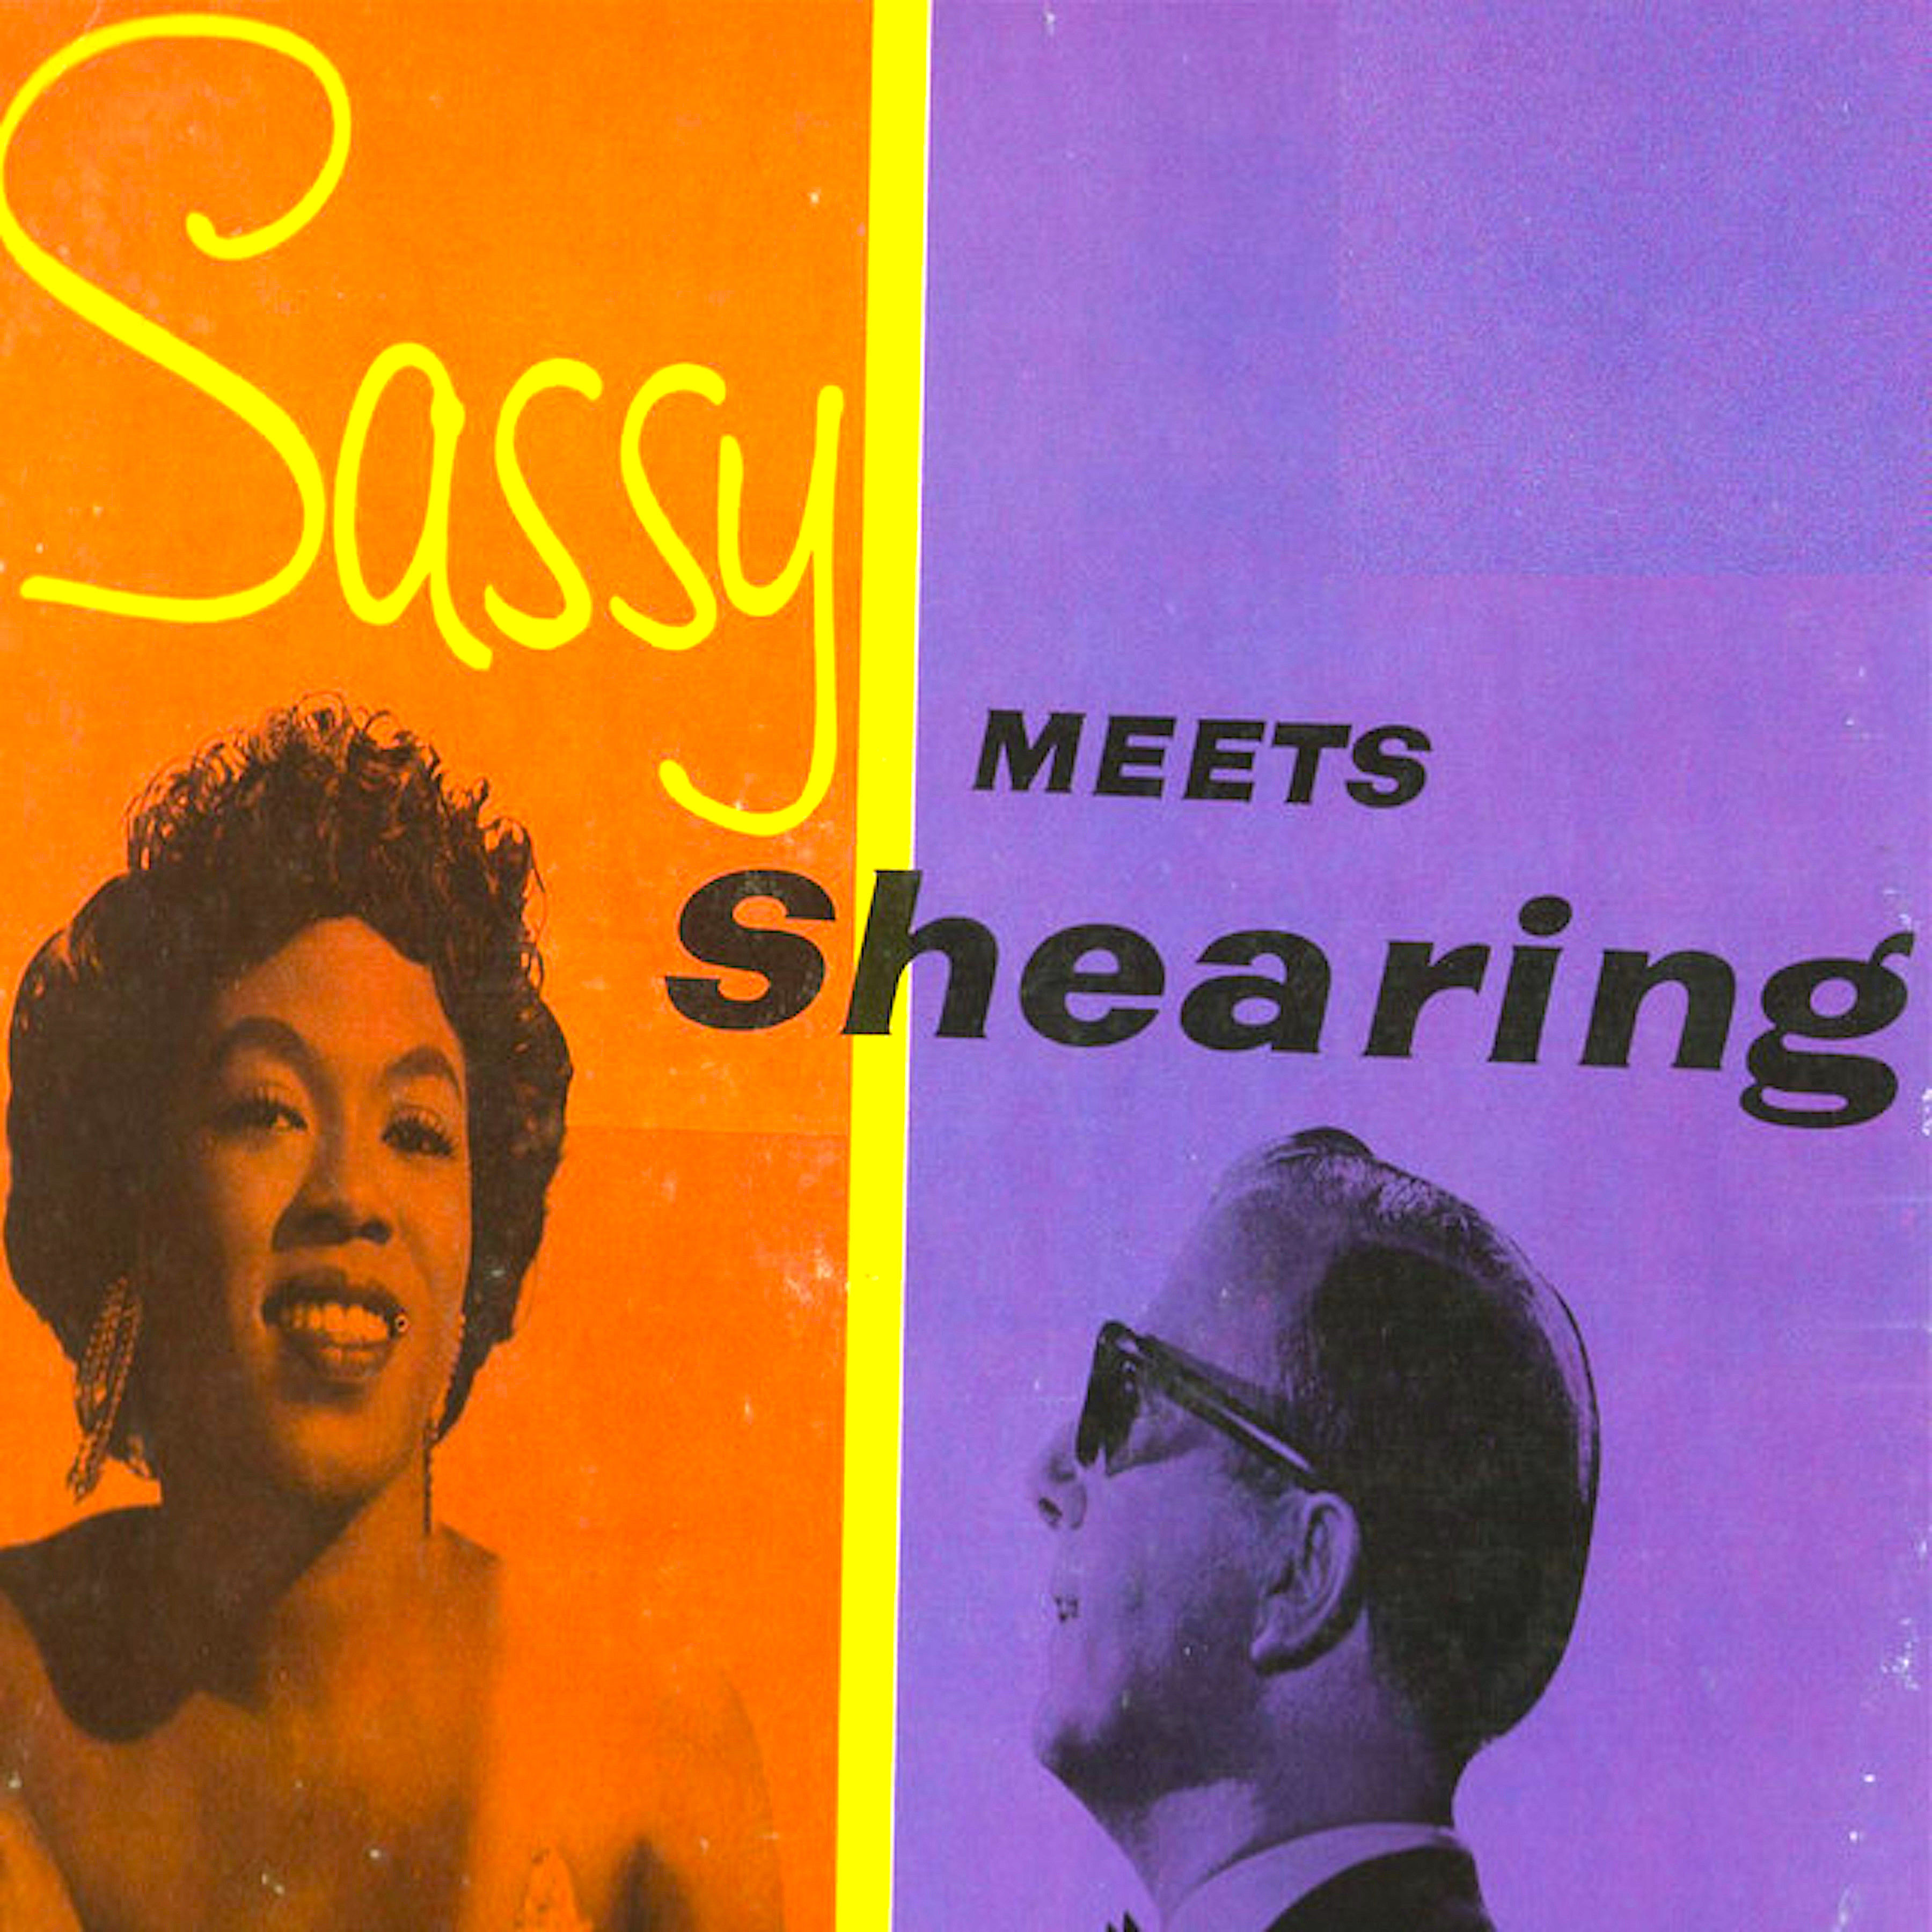 Sarah Vaughan - Sassy Meets Shearing! (1962/2021) [FLAC 24bit/96kHz]